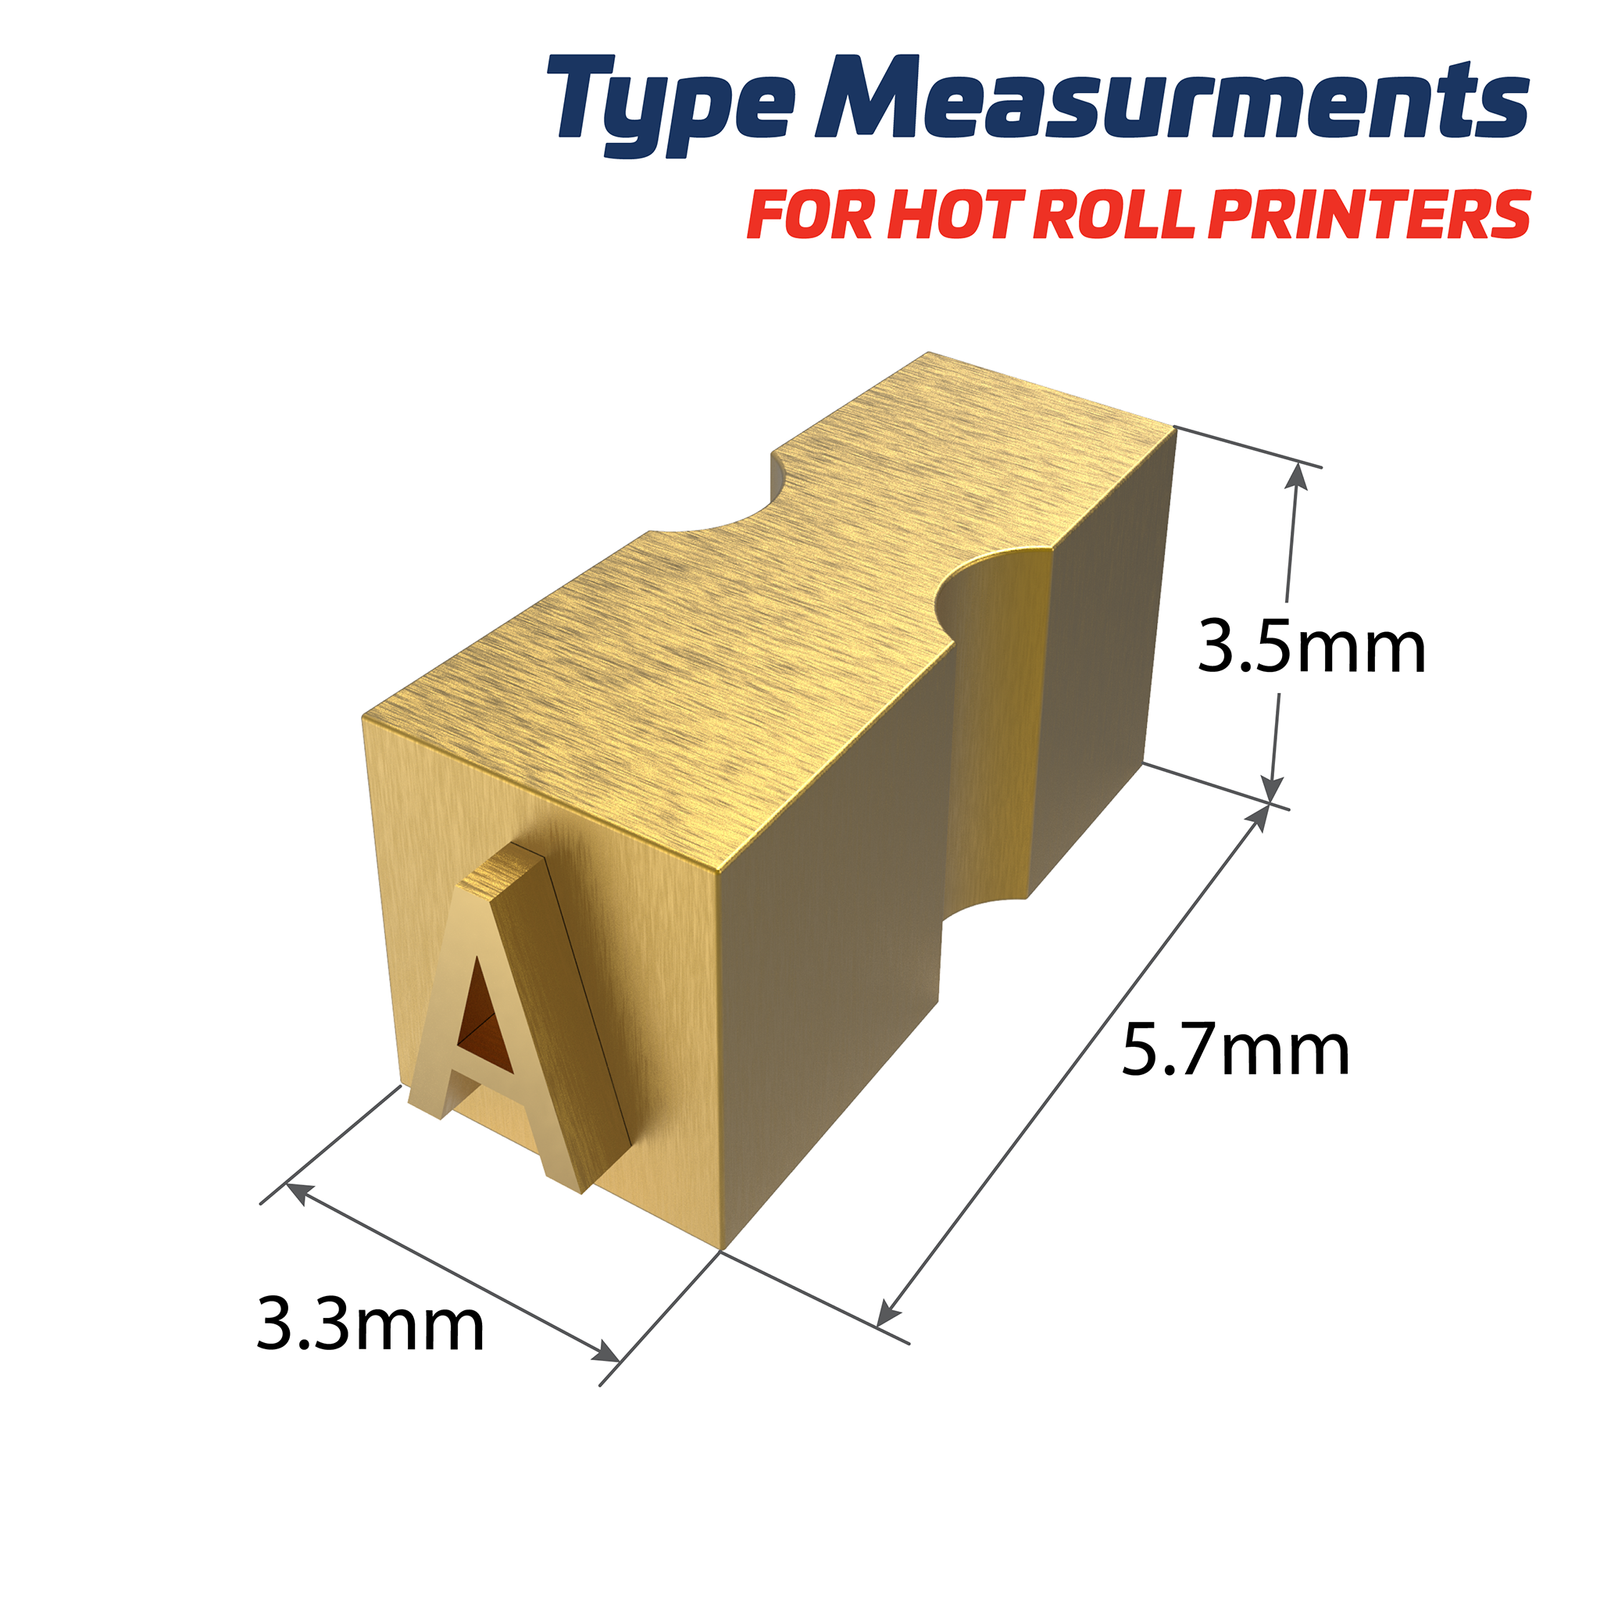 hot roll printer type measurements: 3.3 mm, 5.7mm, 3.5mm